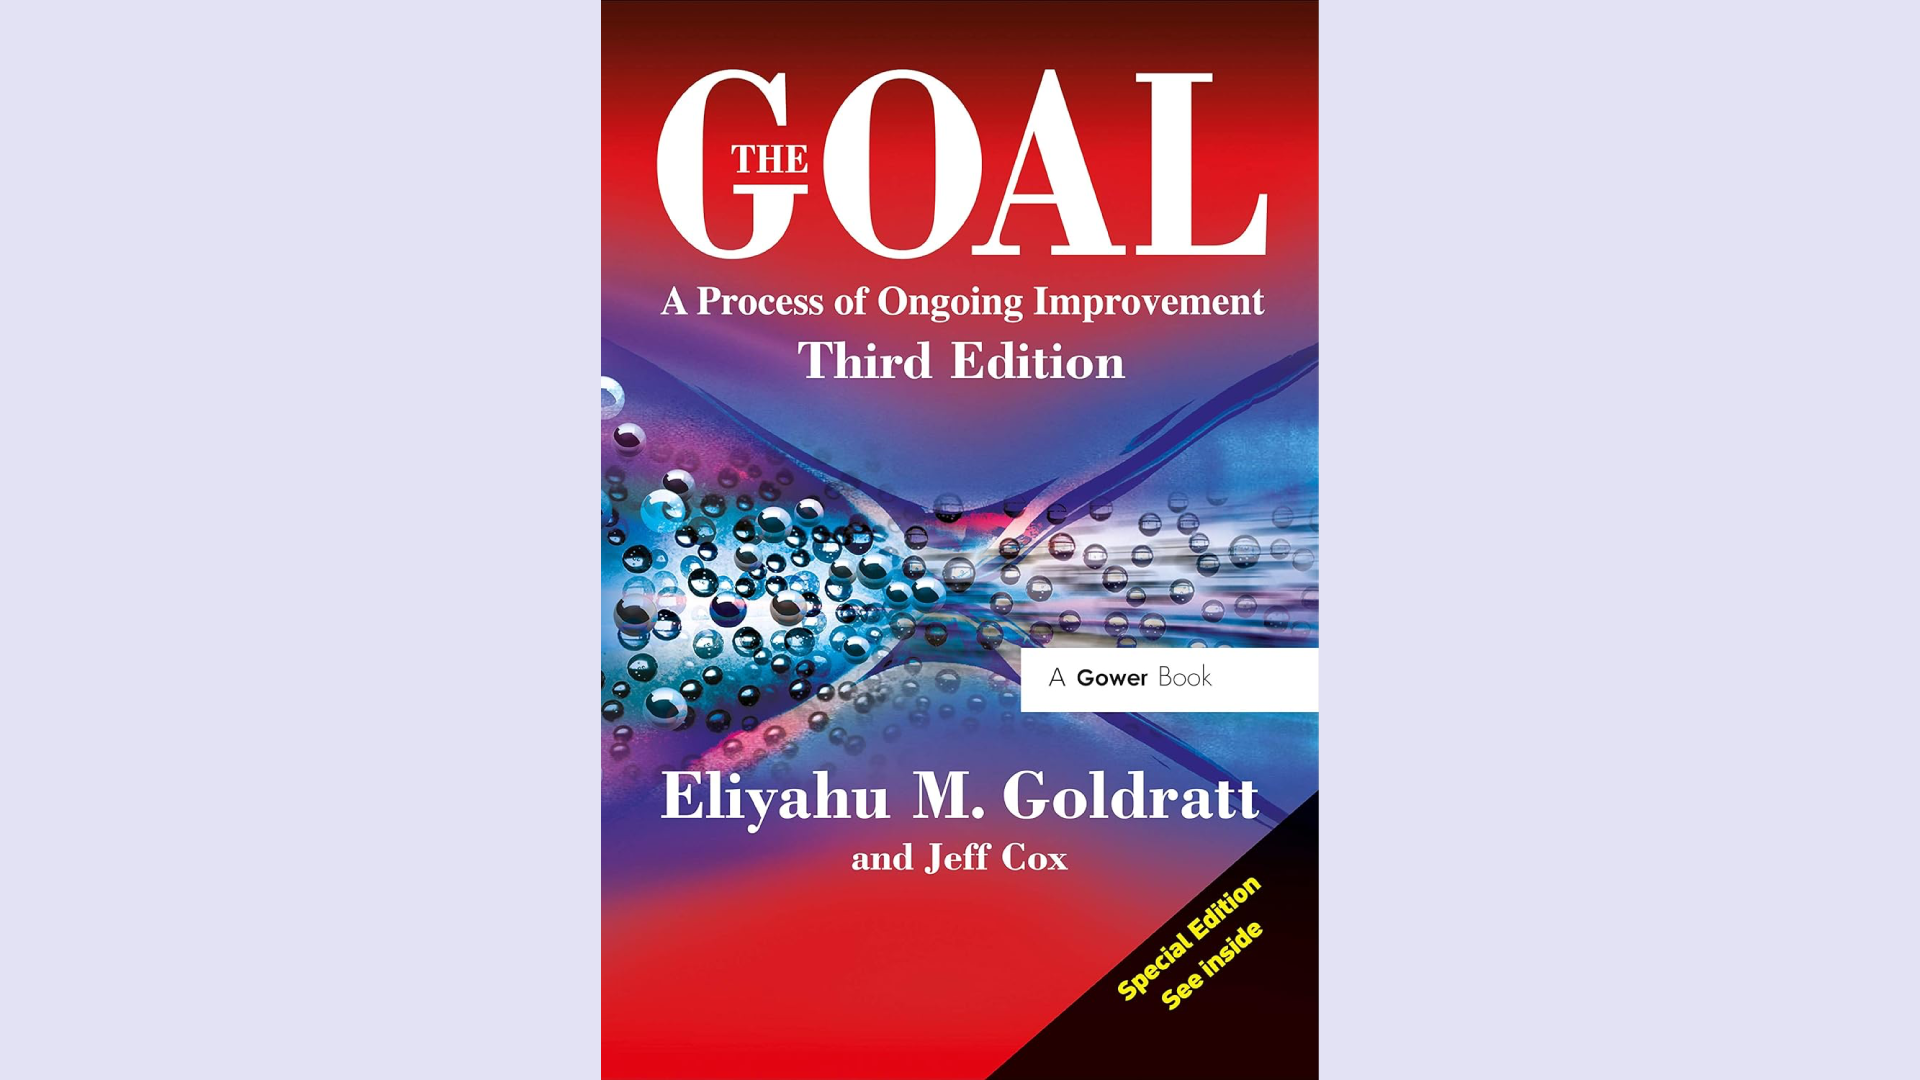 Summary: The Goal by Eliyahu M. Goldratt